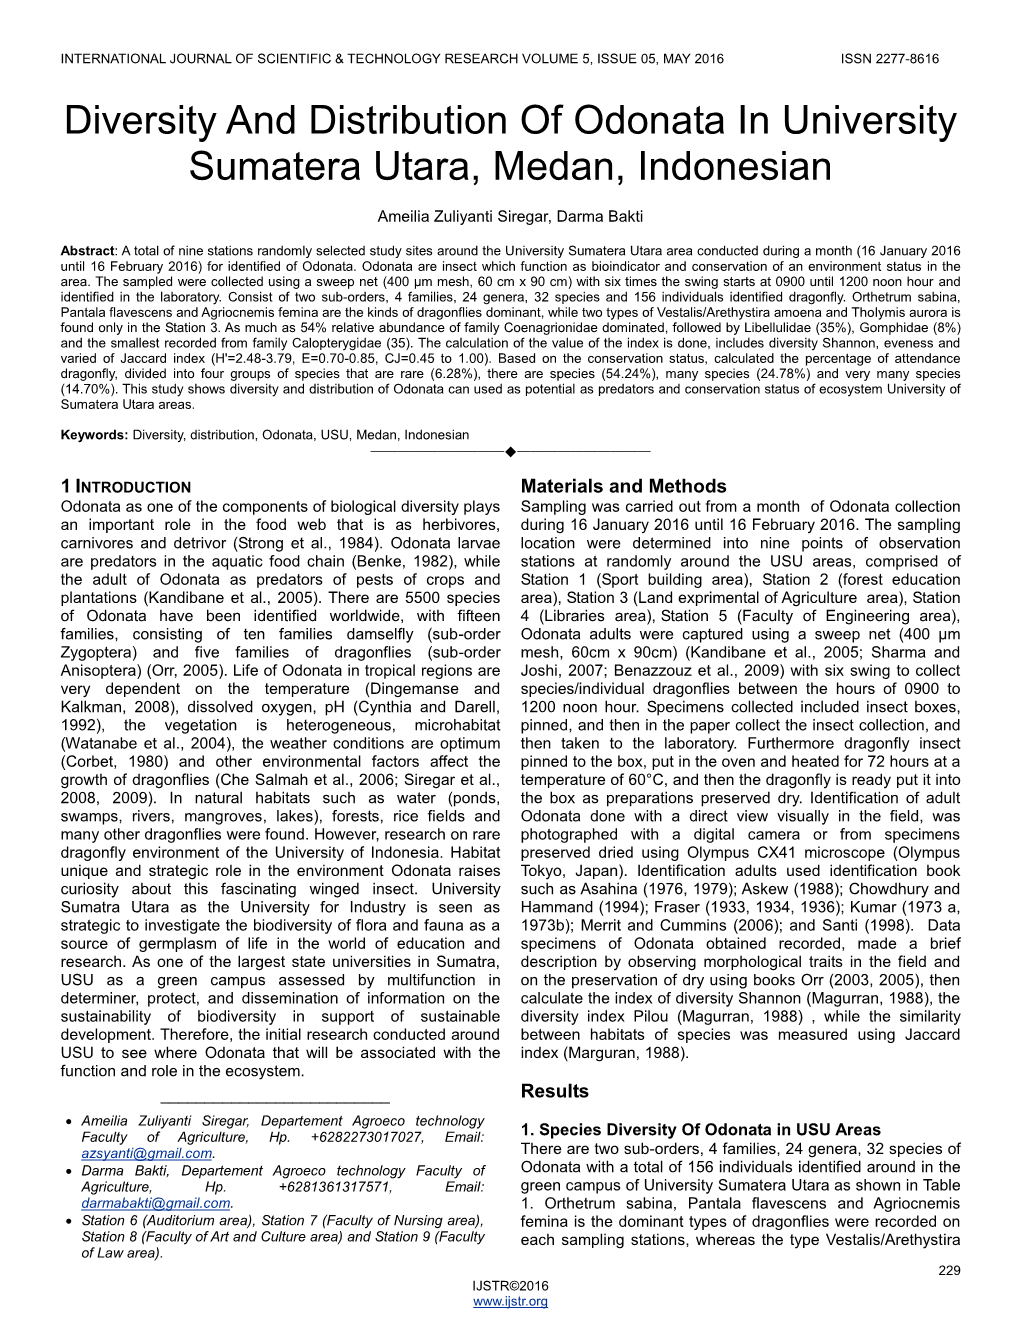 Diversity and Distribution of Odonata in University Sumatera Utara, Medan, Indonesian